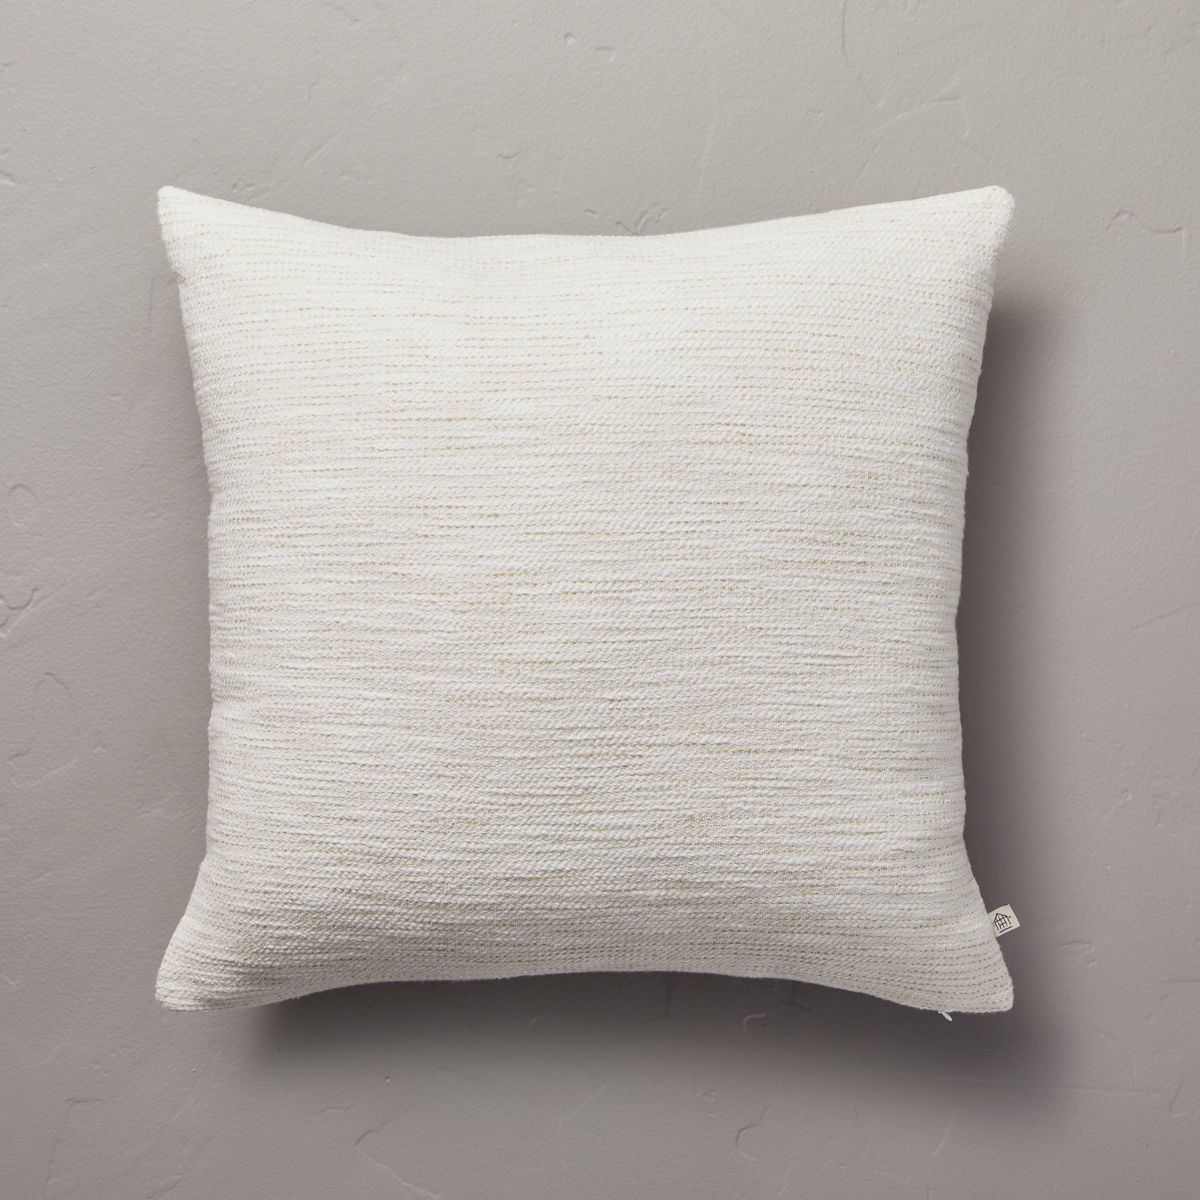 18"x18" Textured Slub Stripe Square Throw Pillow Cream/Khaki - Hearth & Hand™ with Magnolia | Target